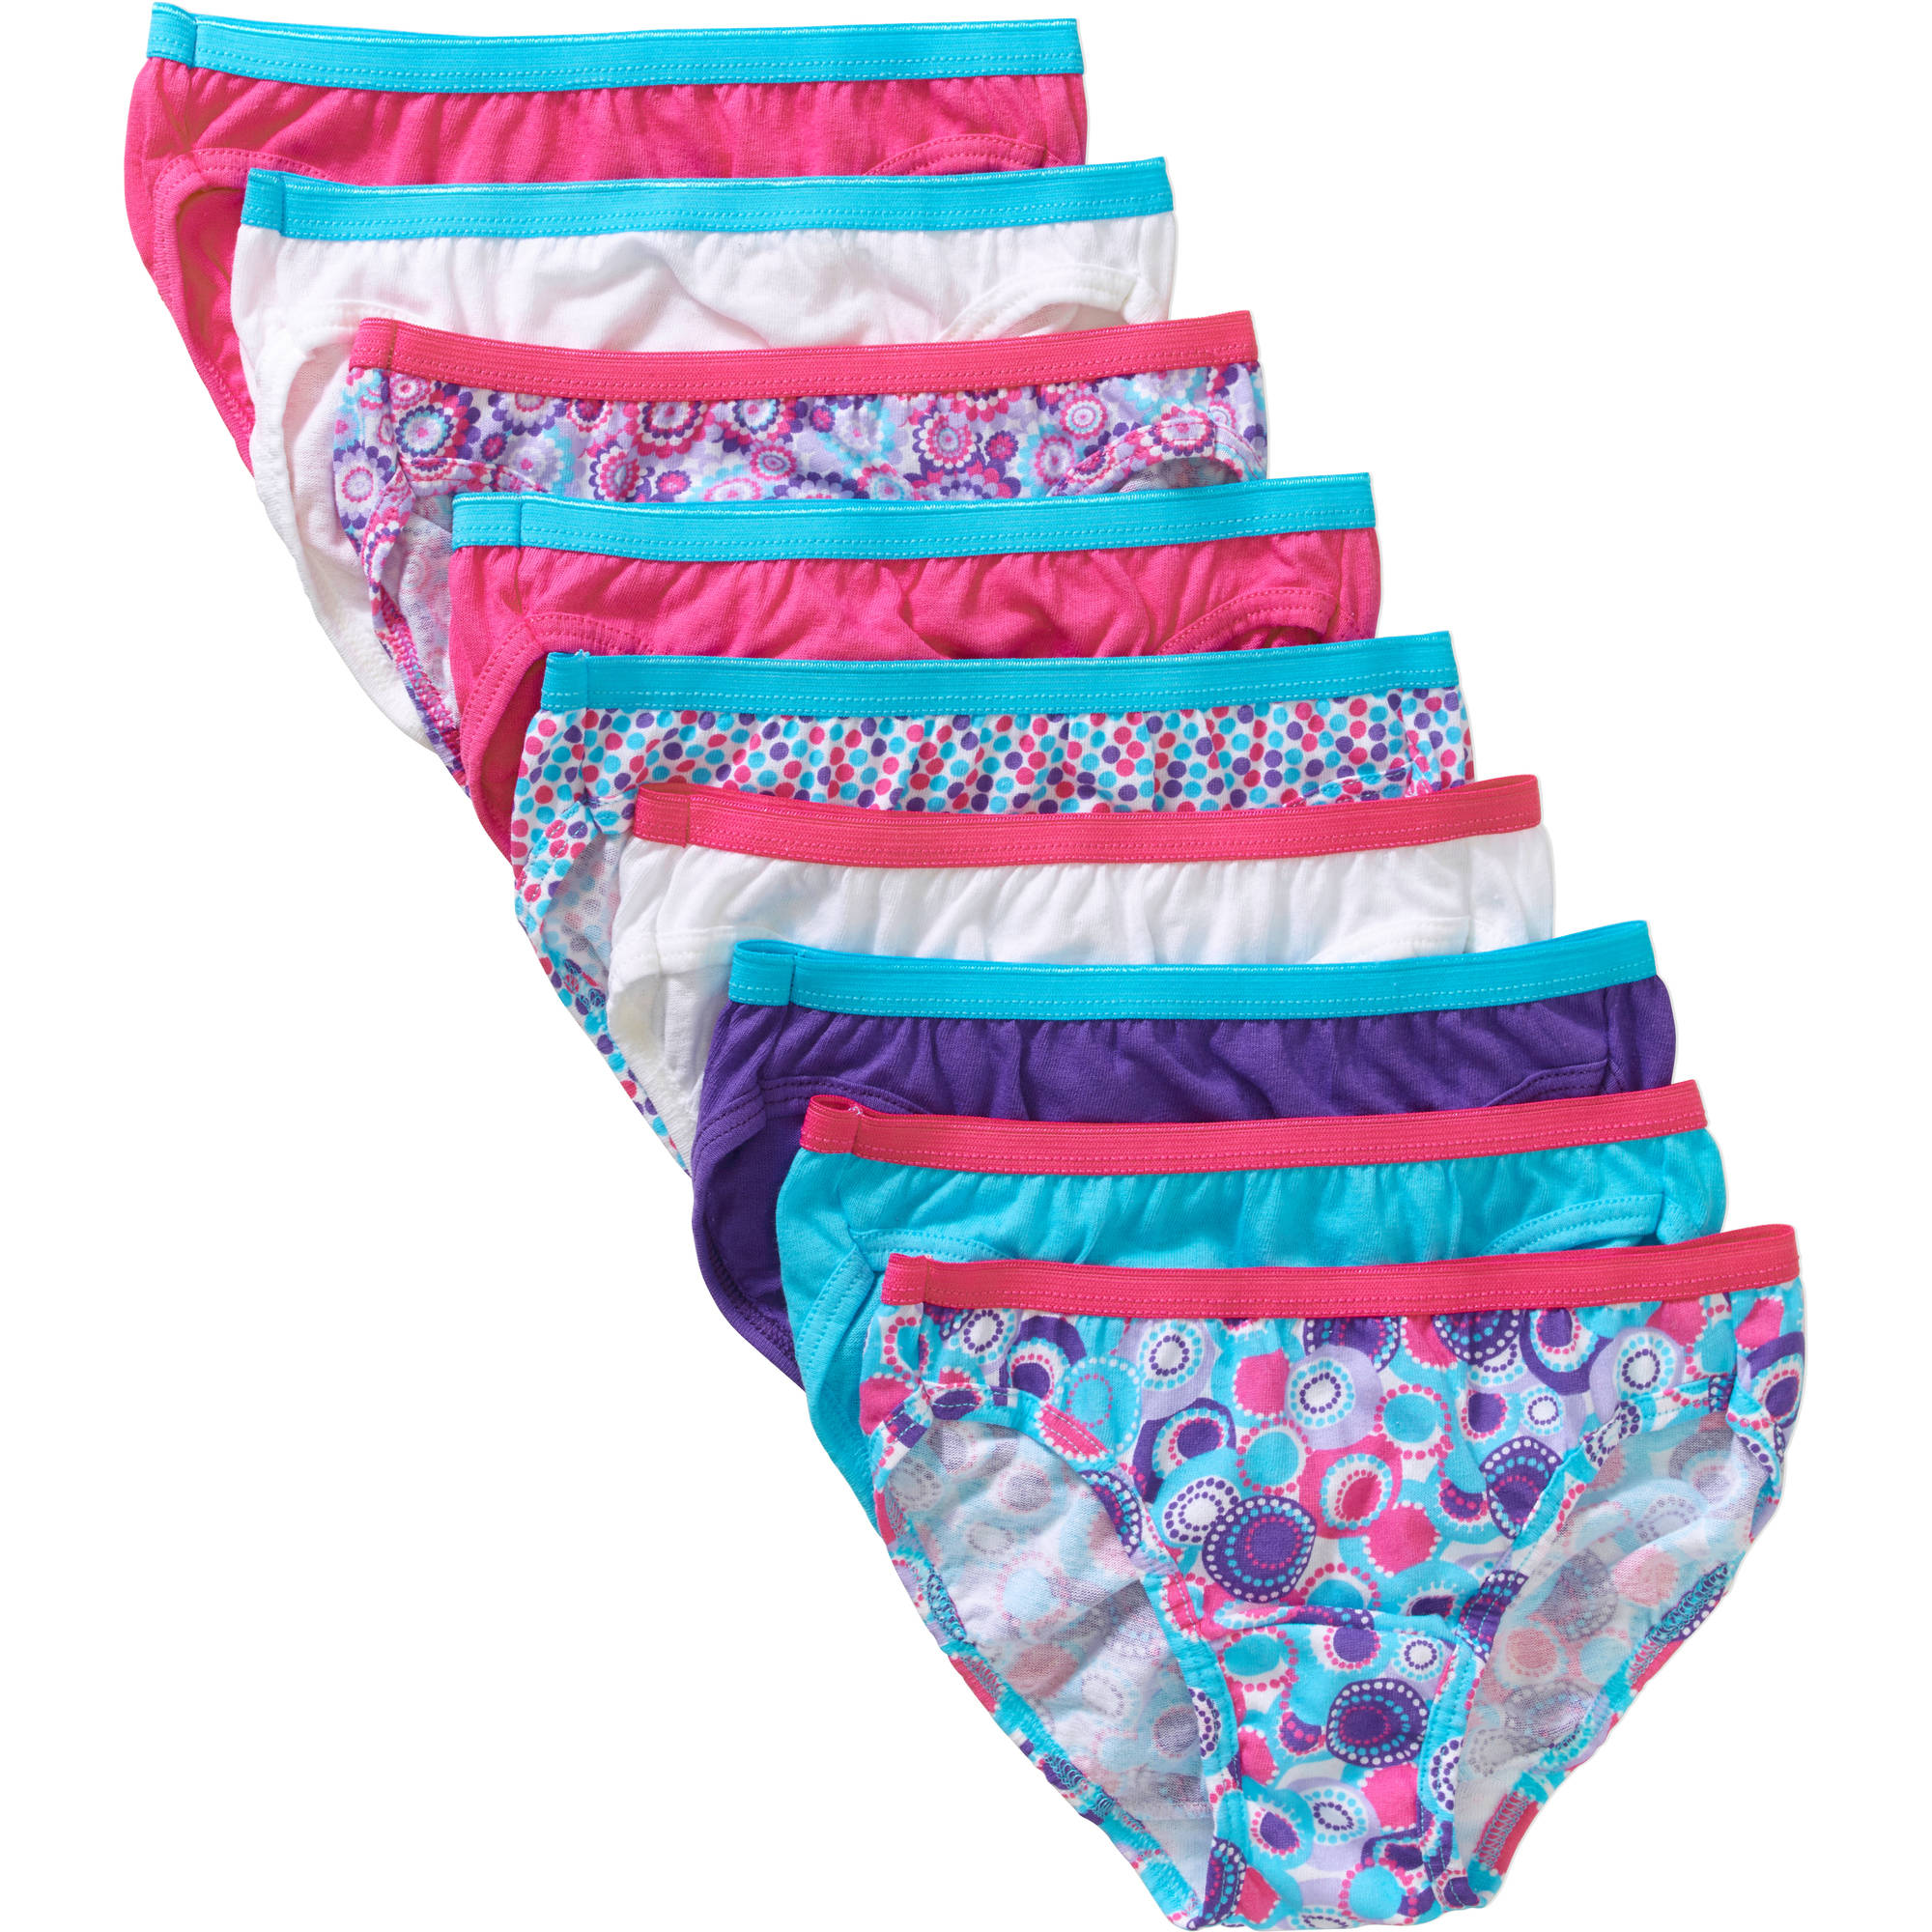 Hanes Girls' Assorted No Ride Up Cotton Bikini Panties 9 Pack - image 1 of 5